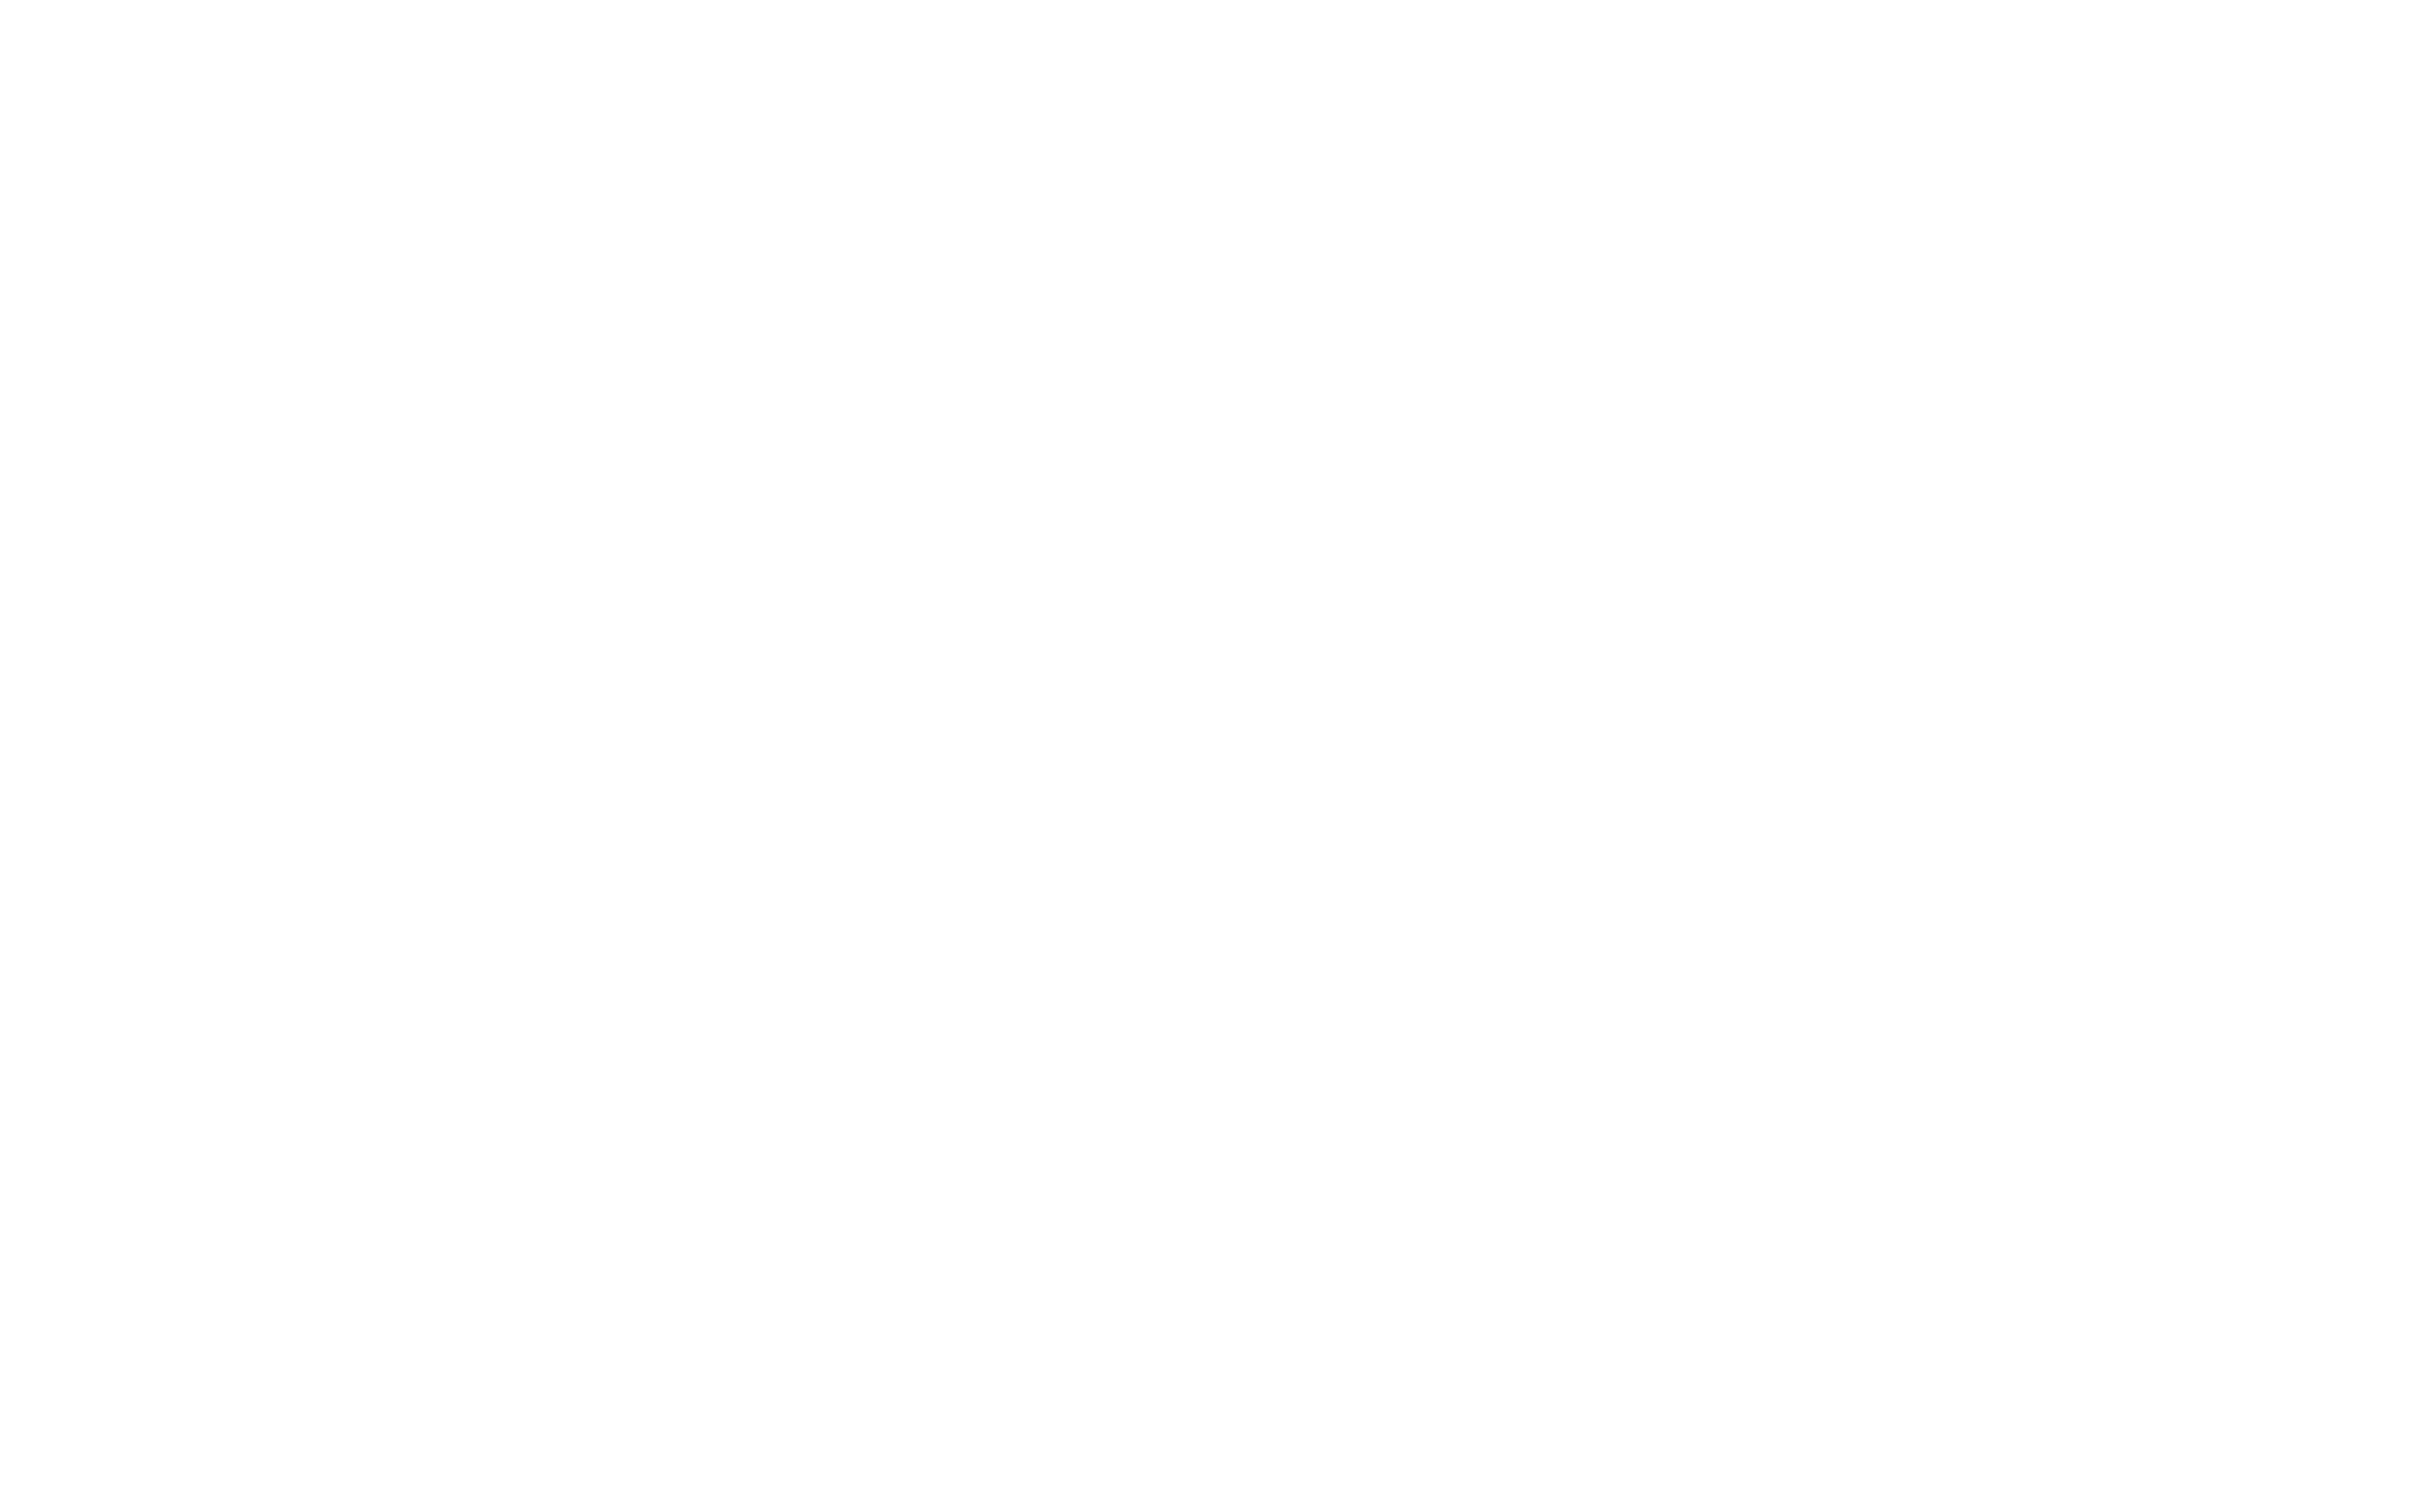 SchwarzwaldLaser